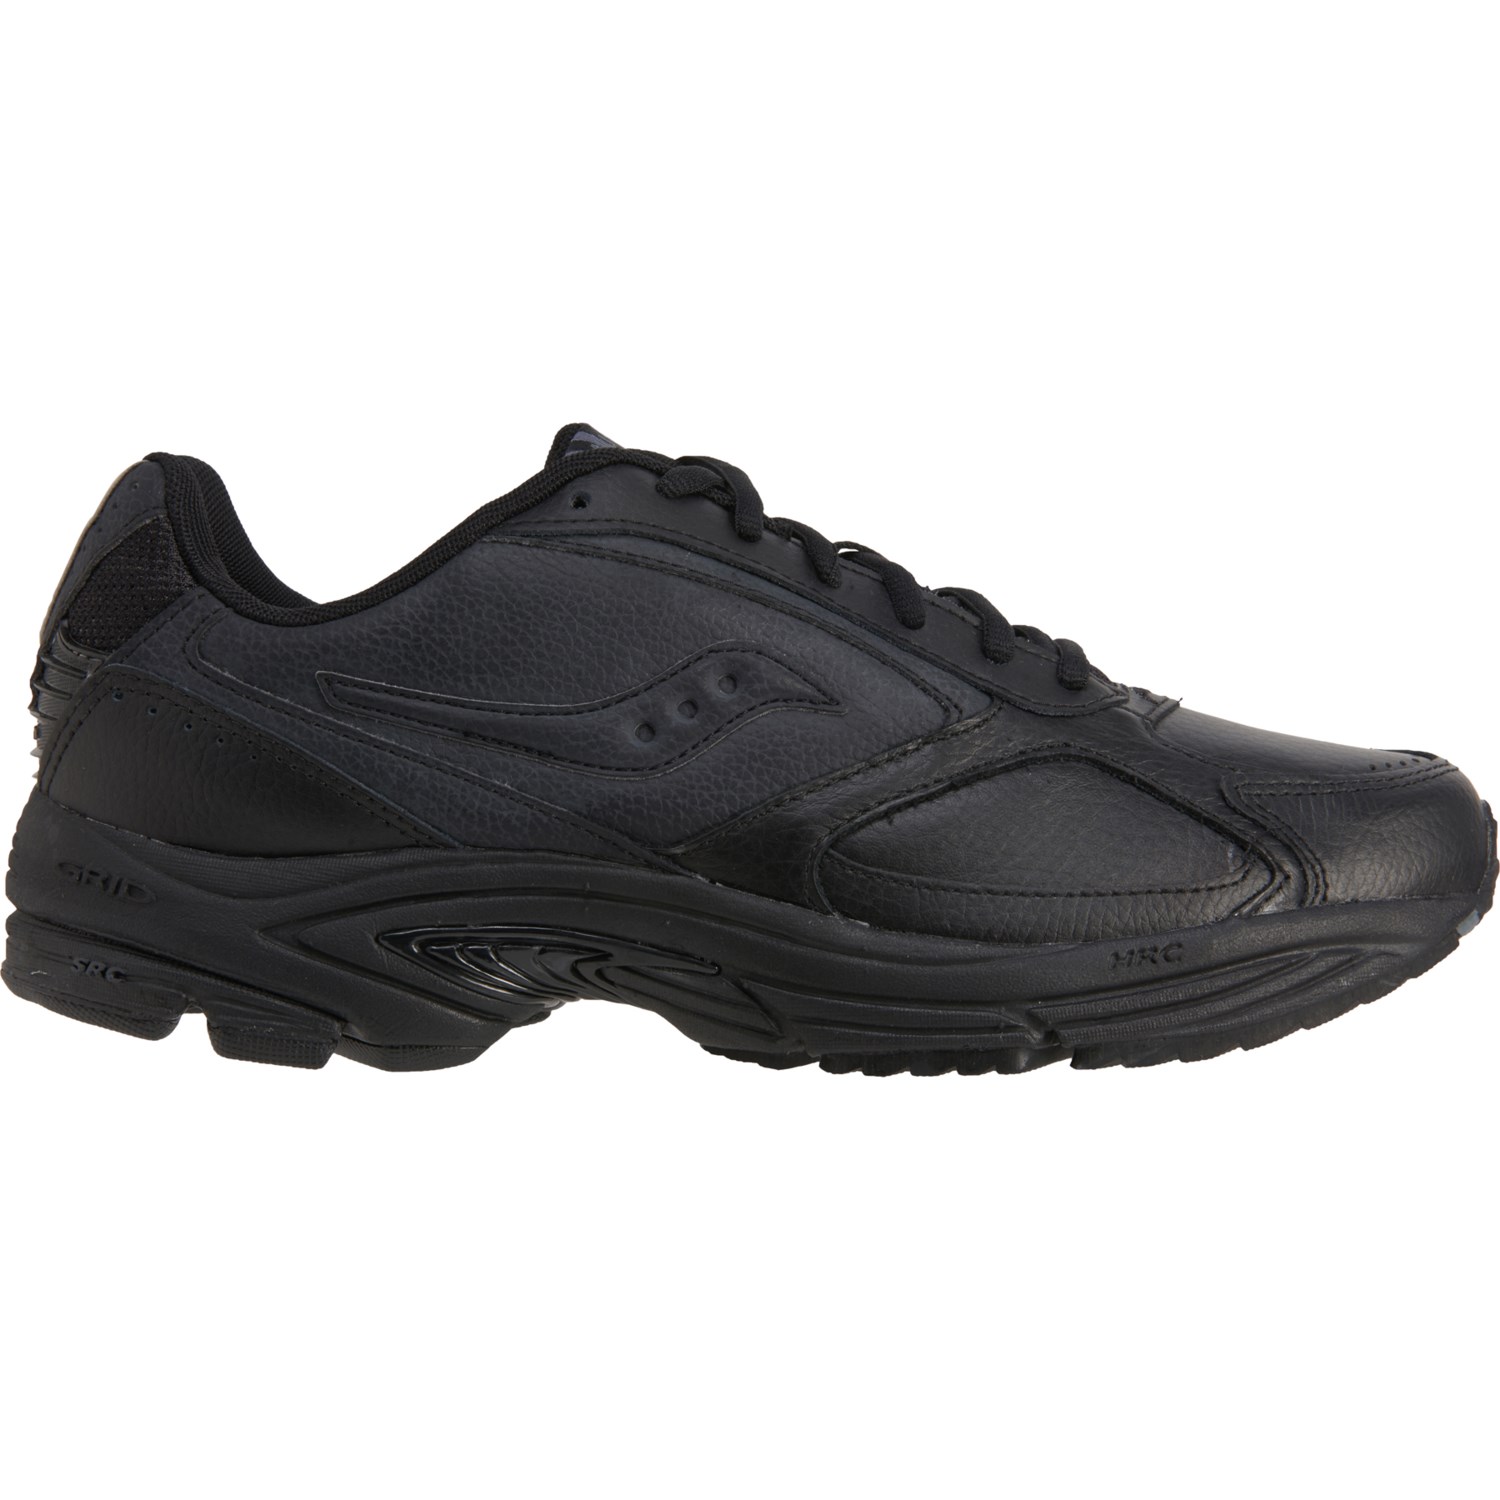 Saucony Grid Omni Walking Shoes (For Men) - Save 42%